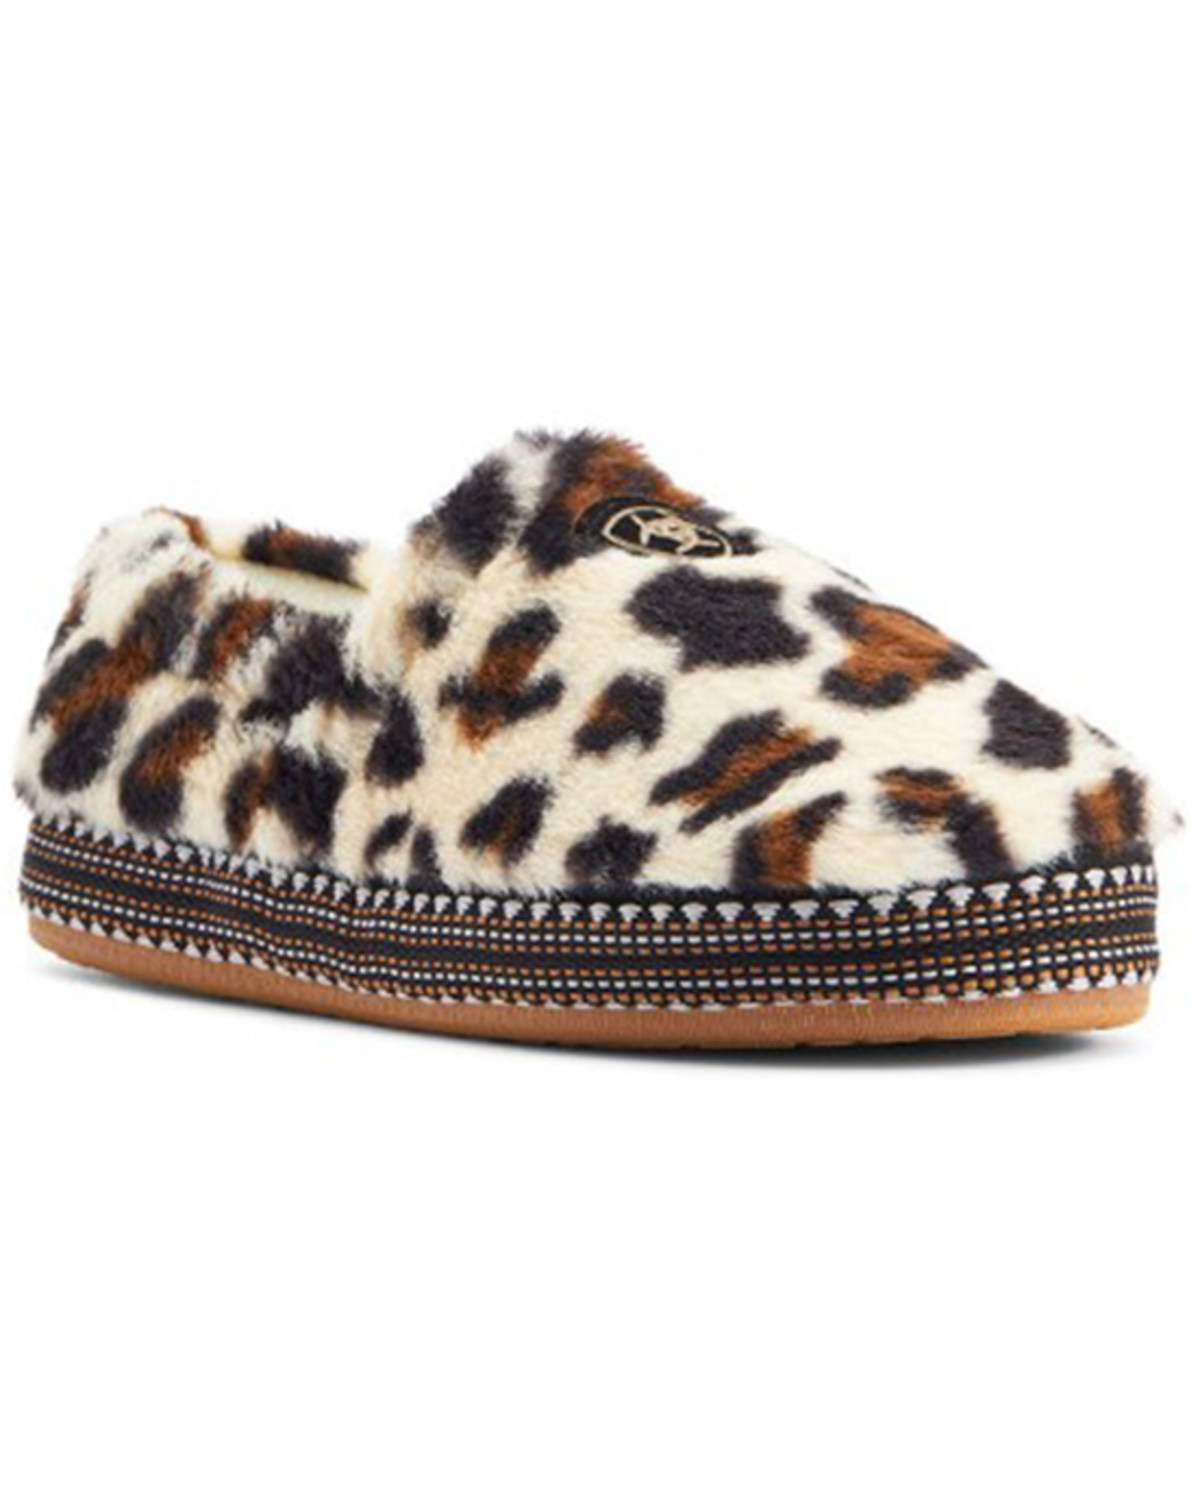 Ariat Women's Leopard Print Snuggle Slippers - Round Toe